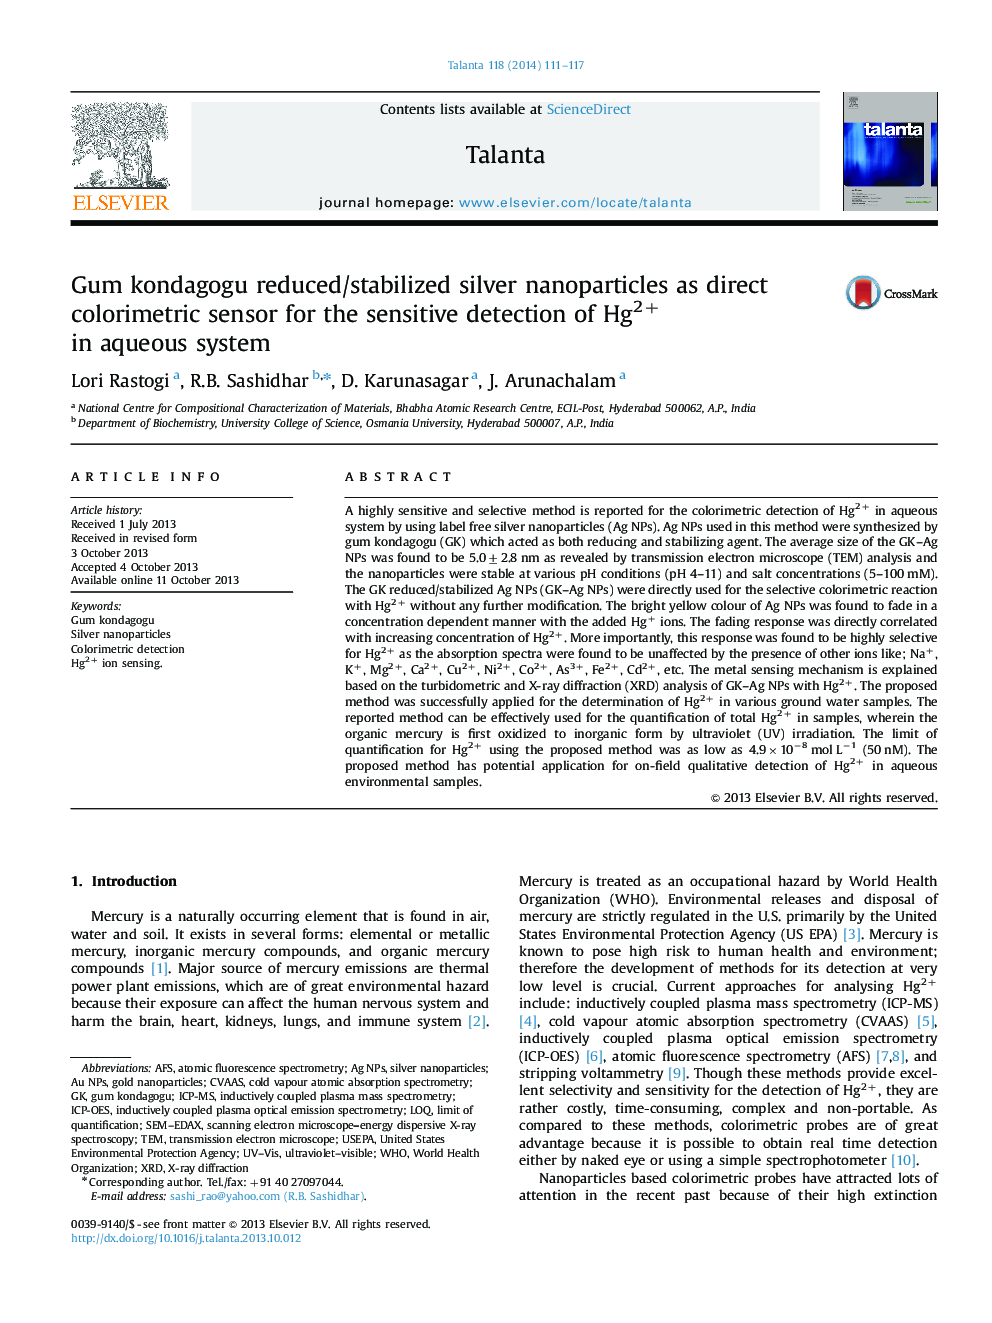 Gum kondagogu reduced/stabilized silver nanoparticles as direct colorimetric sensor for the sensitive detection of Hg2+ in aqueous system